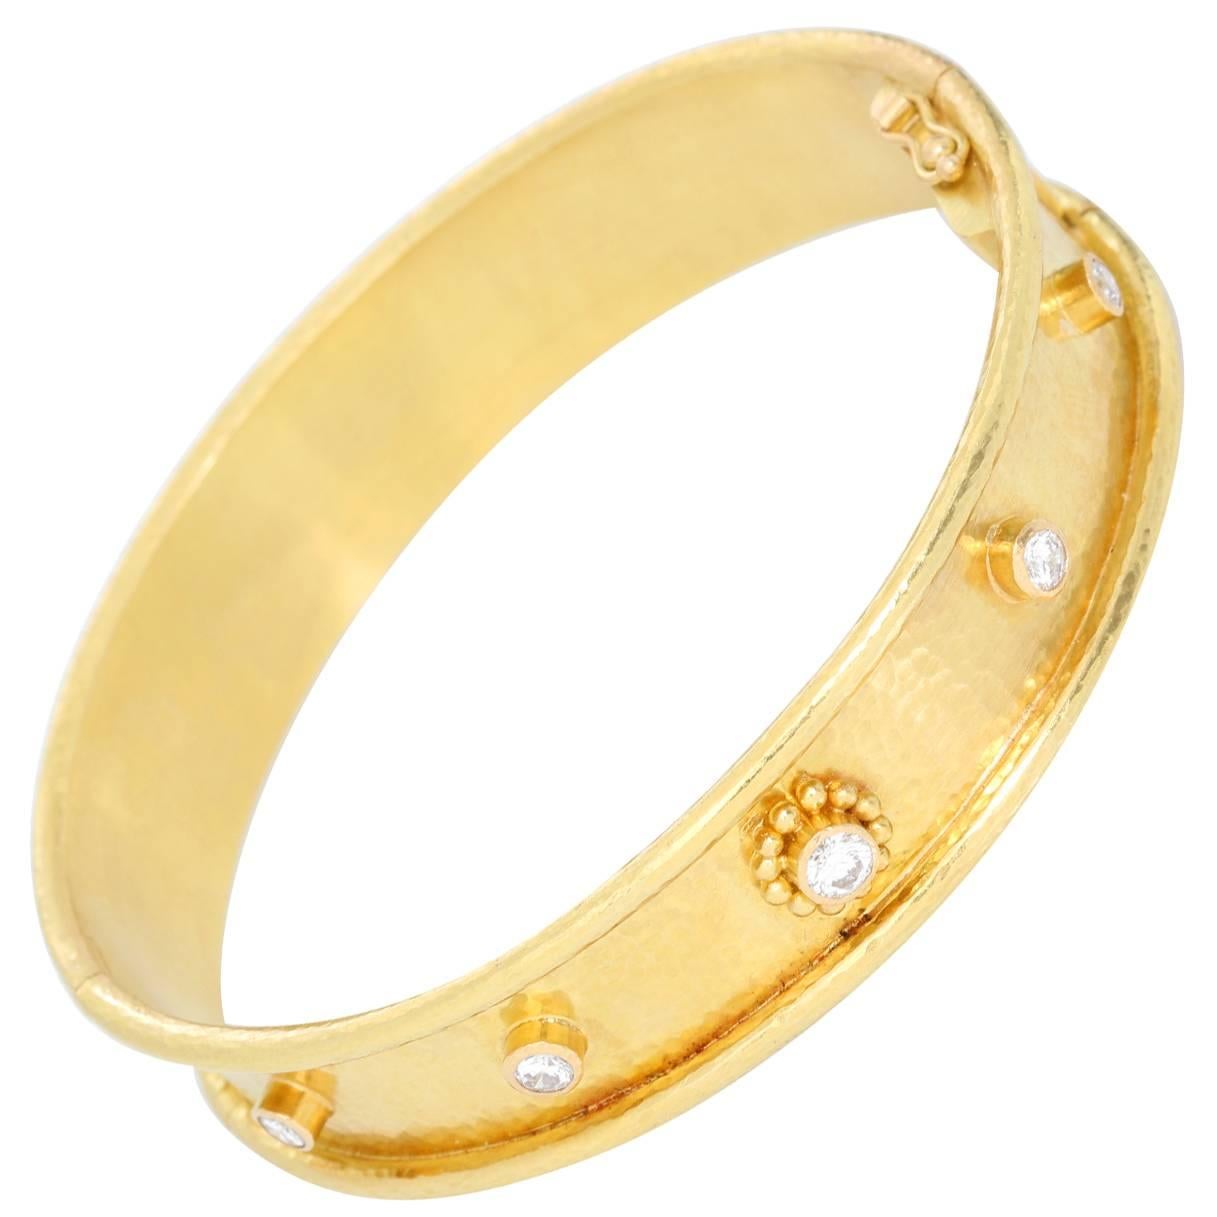 Elizabeth Locke 19 Karat Yellow Gold Bangle Bracelet